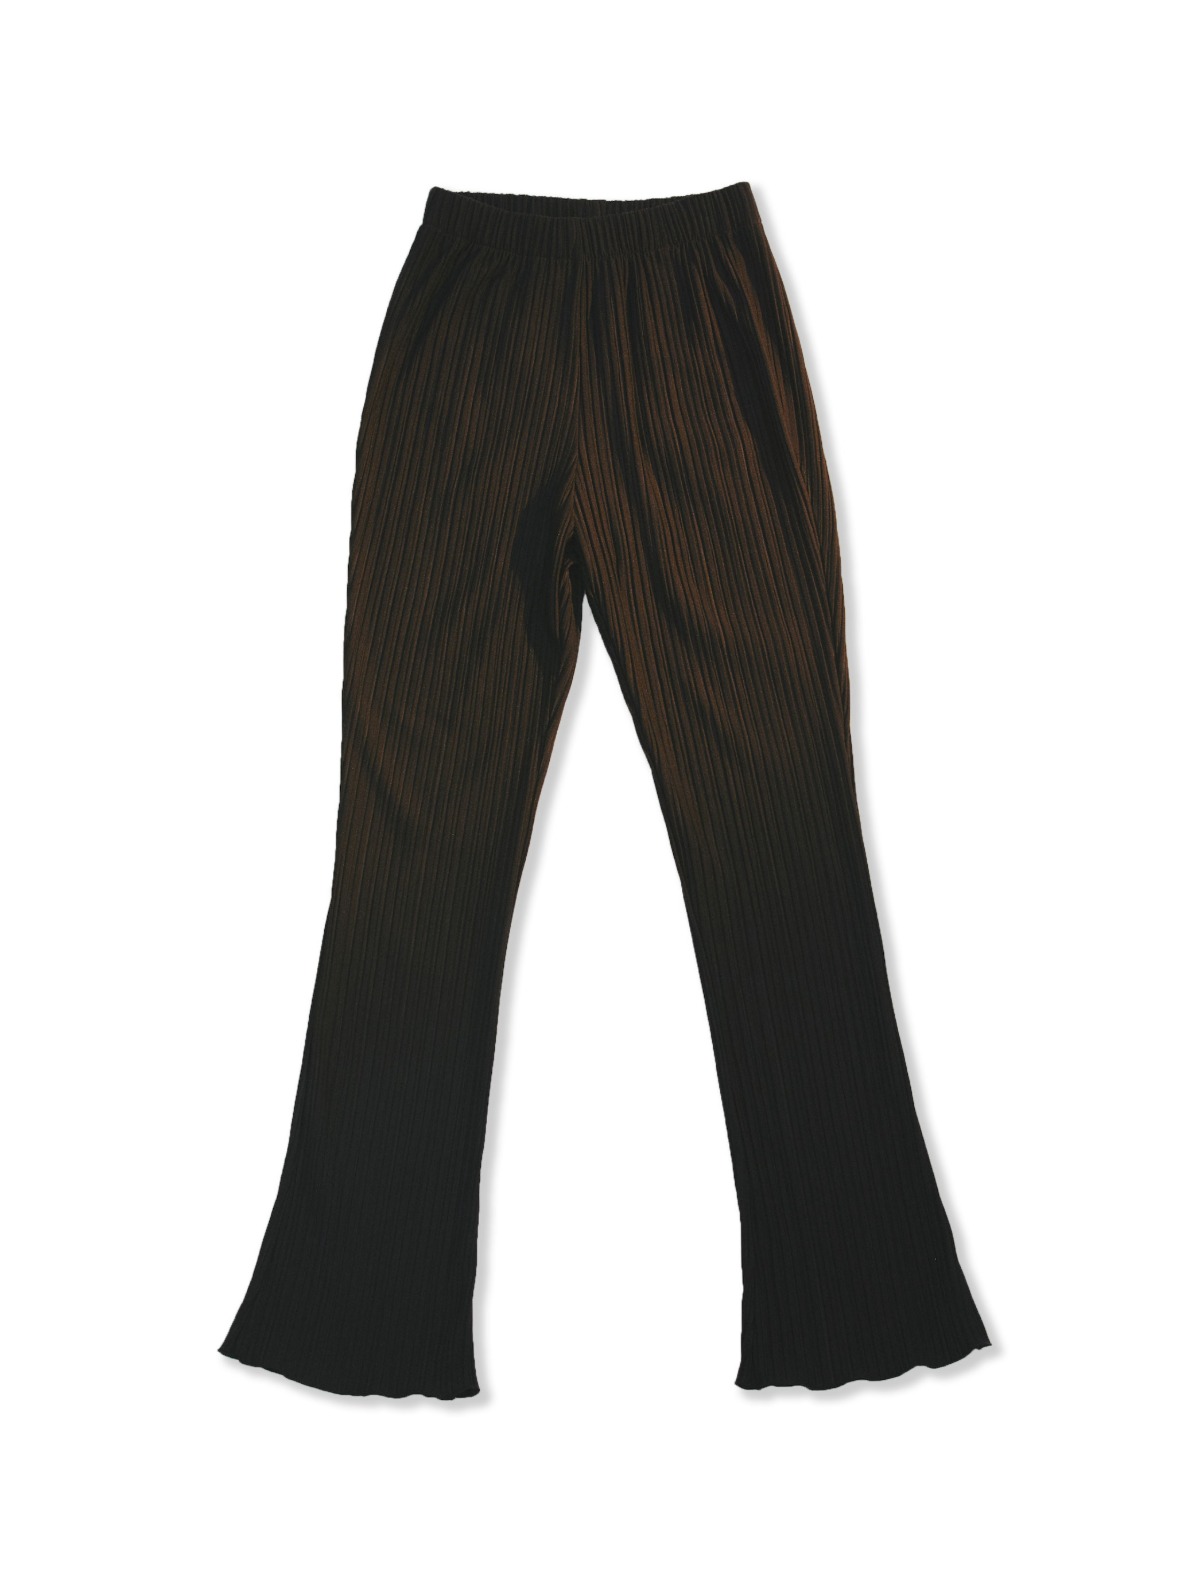 Ribbed Lounge Pants (Black)